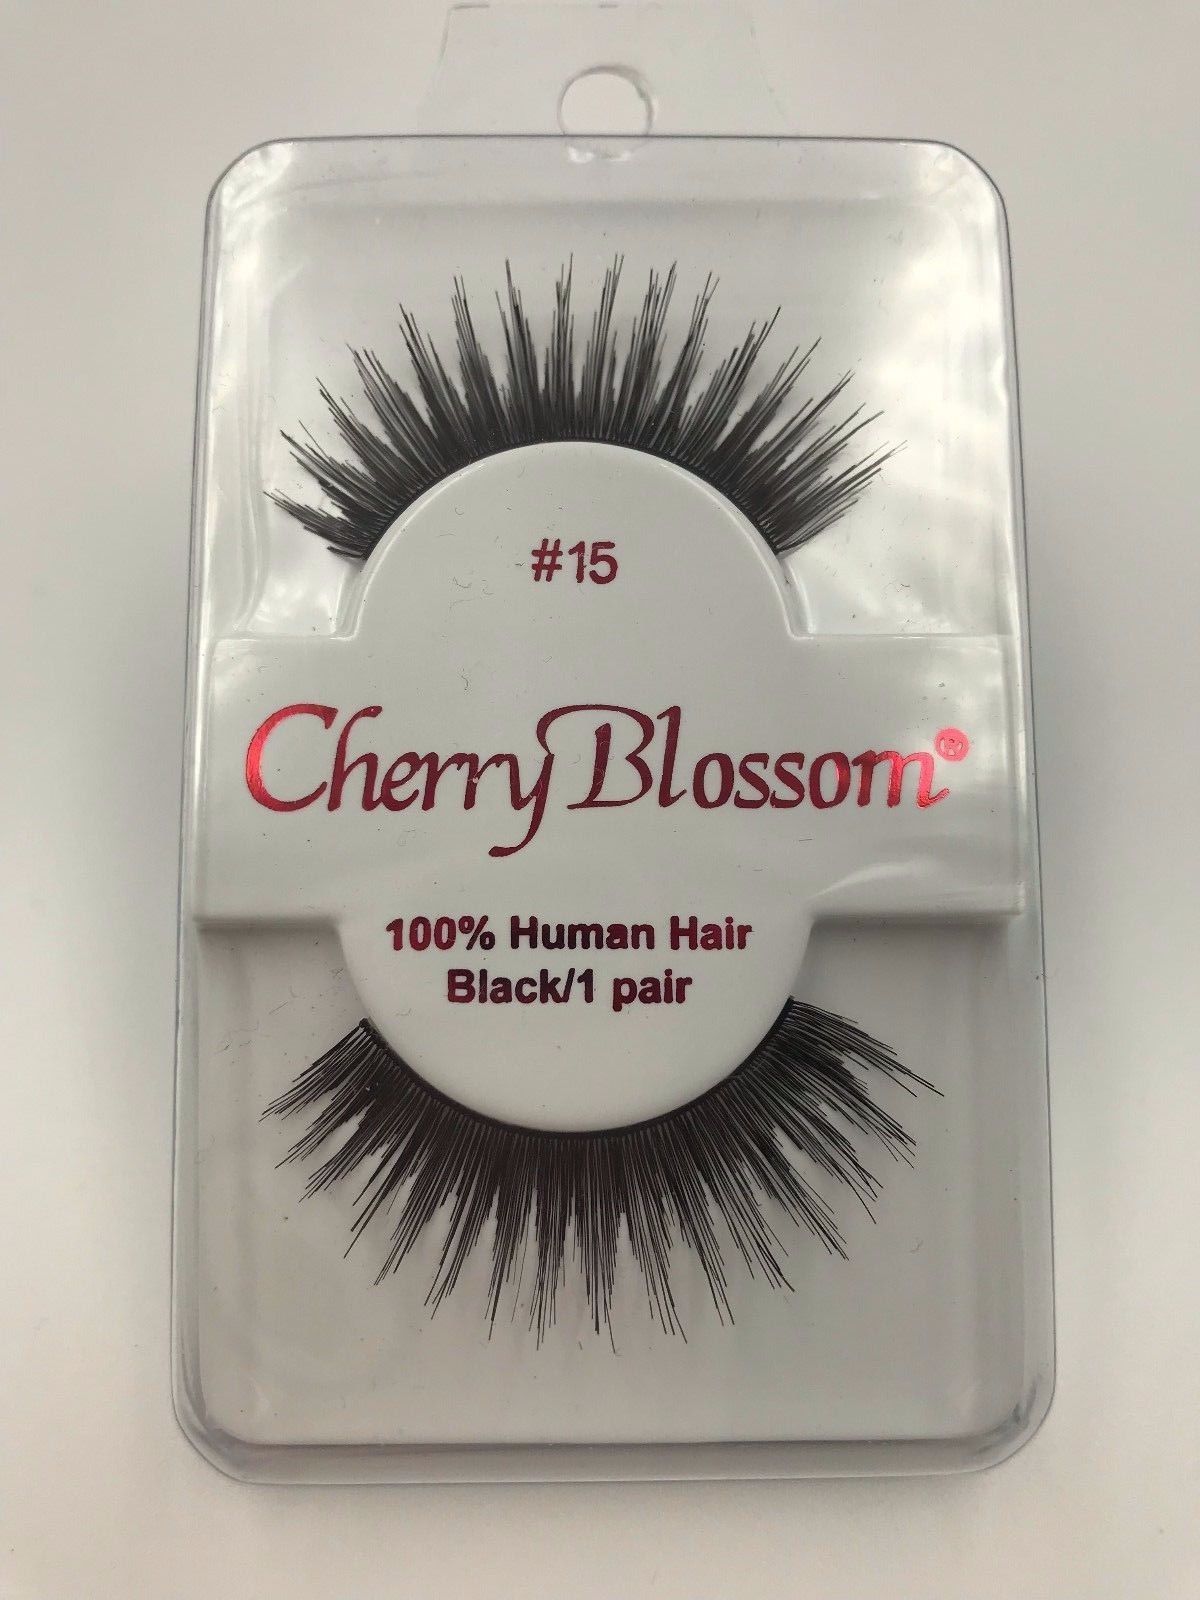 CHERRY BLOSSOM EYELASHES MODEL# 15 100% HUMAN HAIR BLACK 1 PAIR PER EACH PK - $1.89 - $20.99